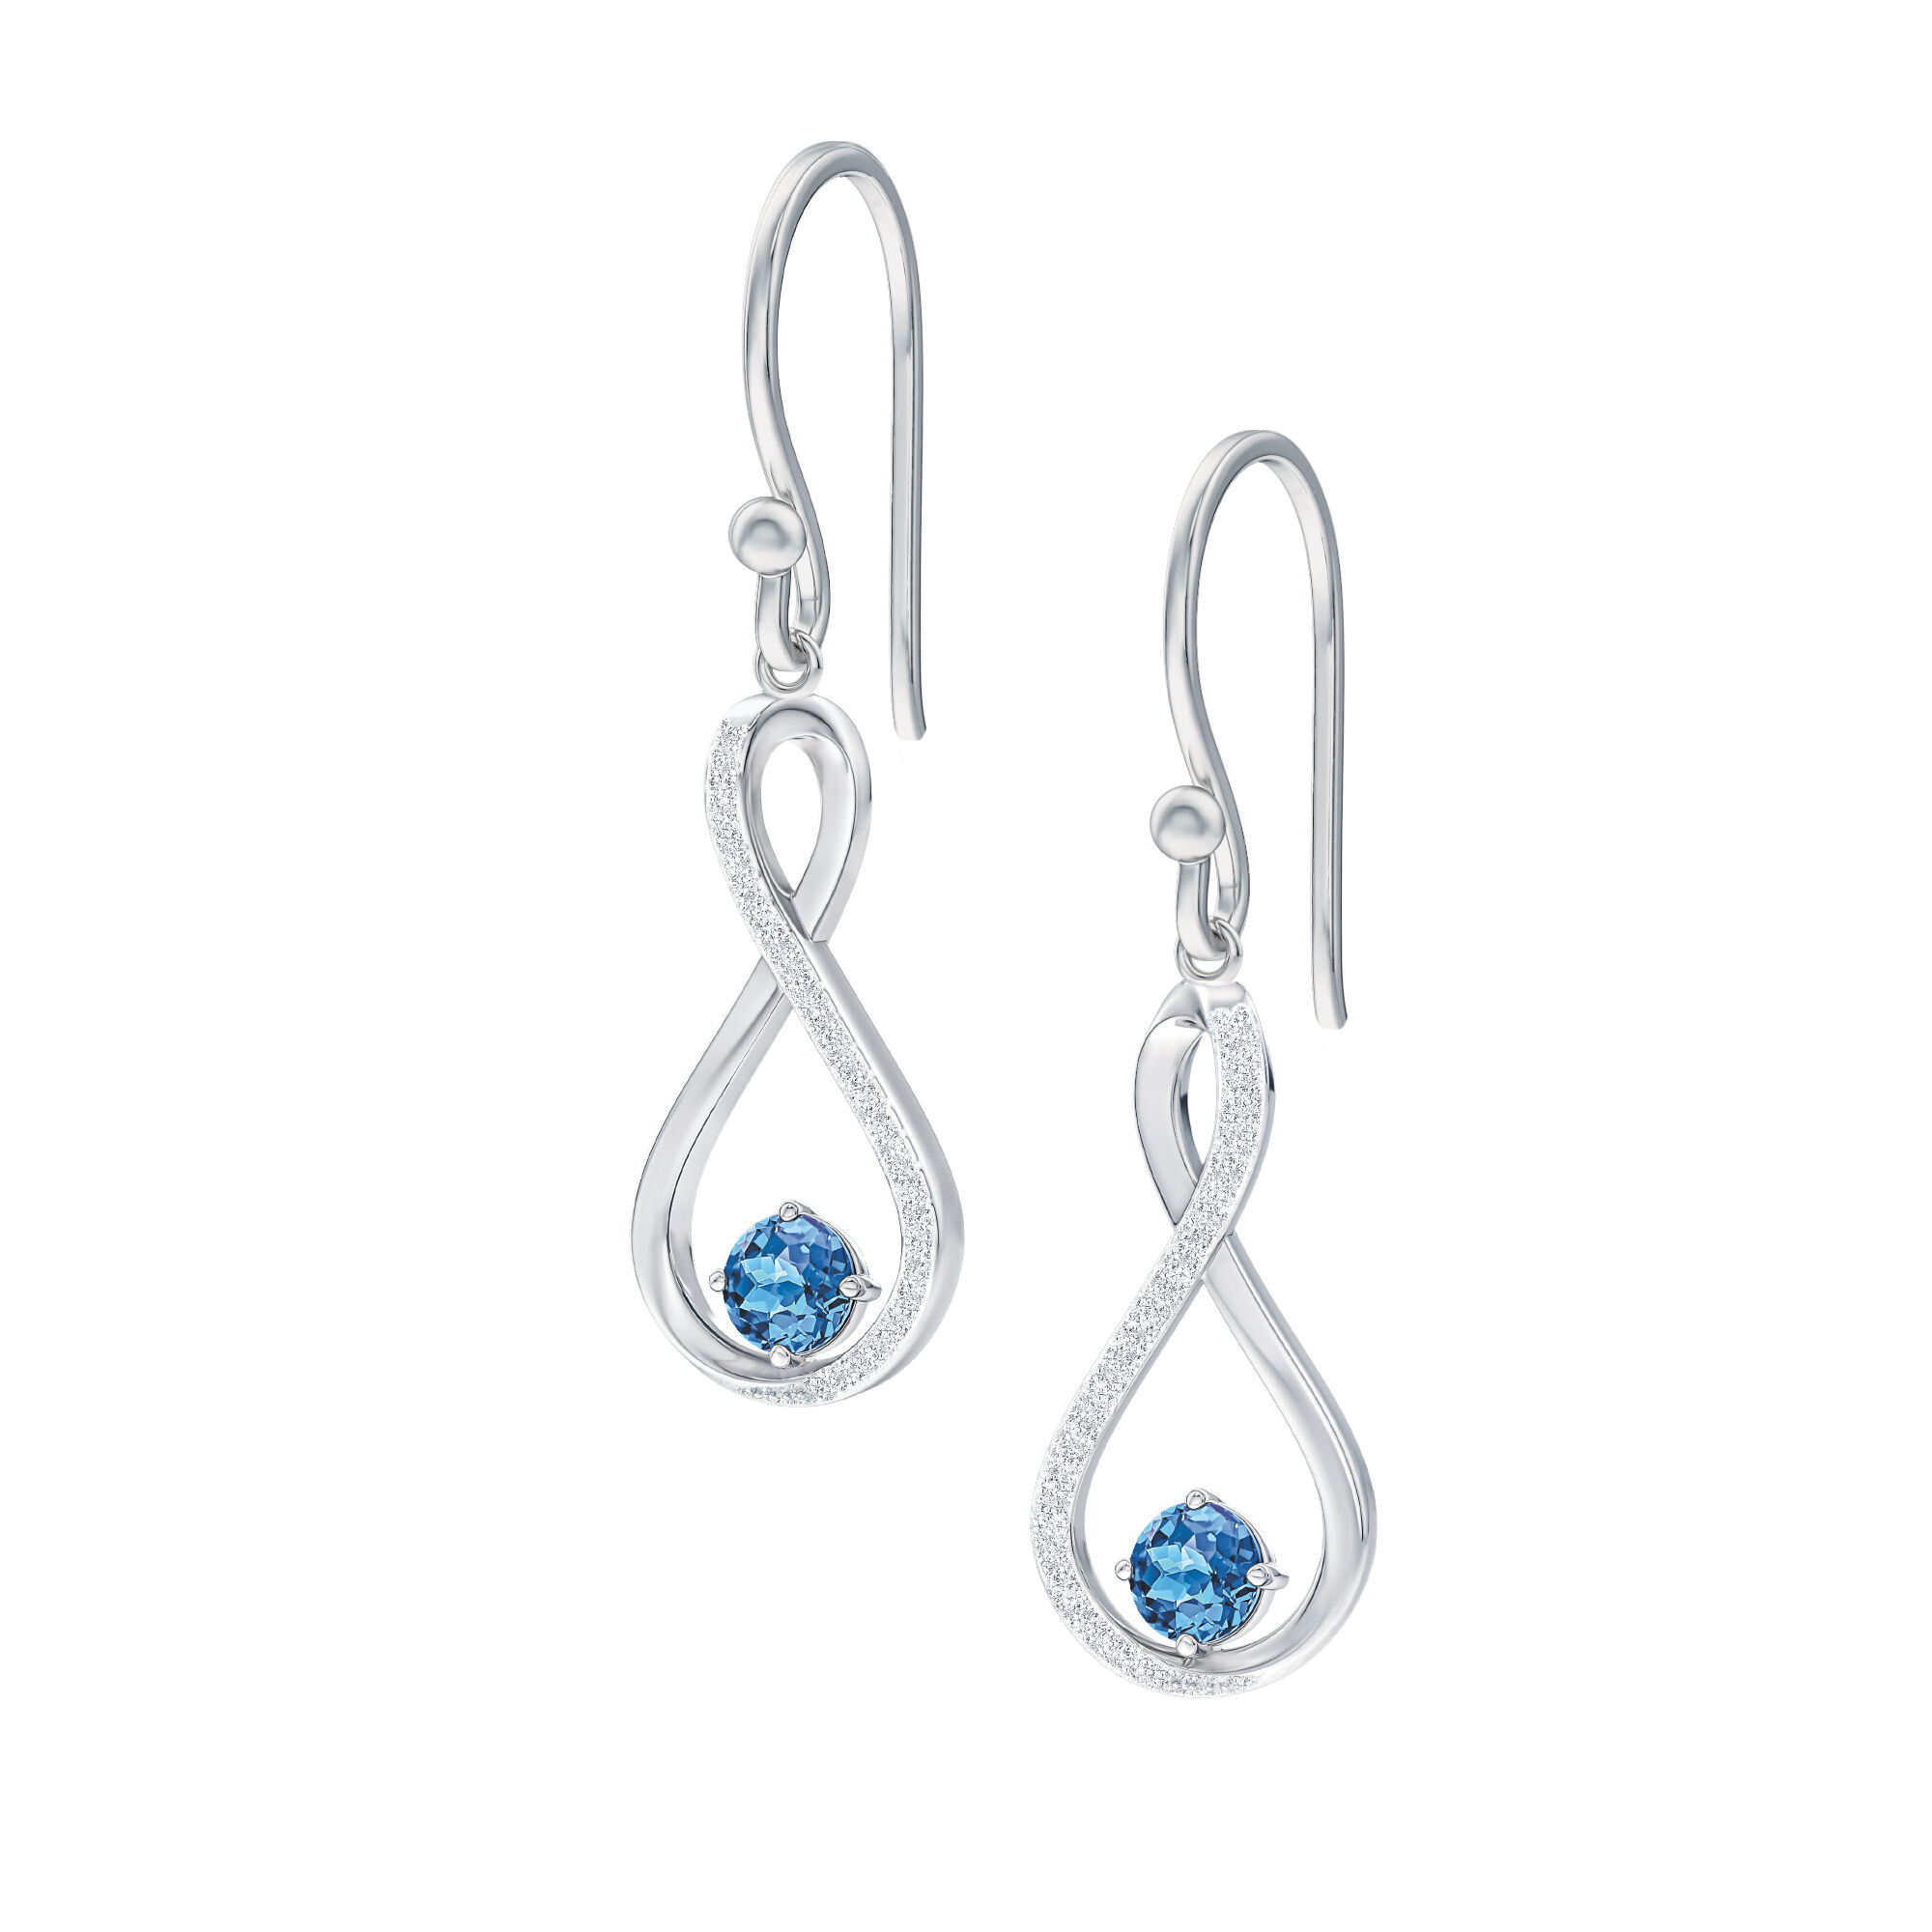 Birthstone and Diamond Earrings 5200 0056 l december